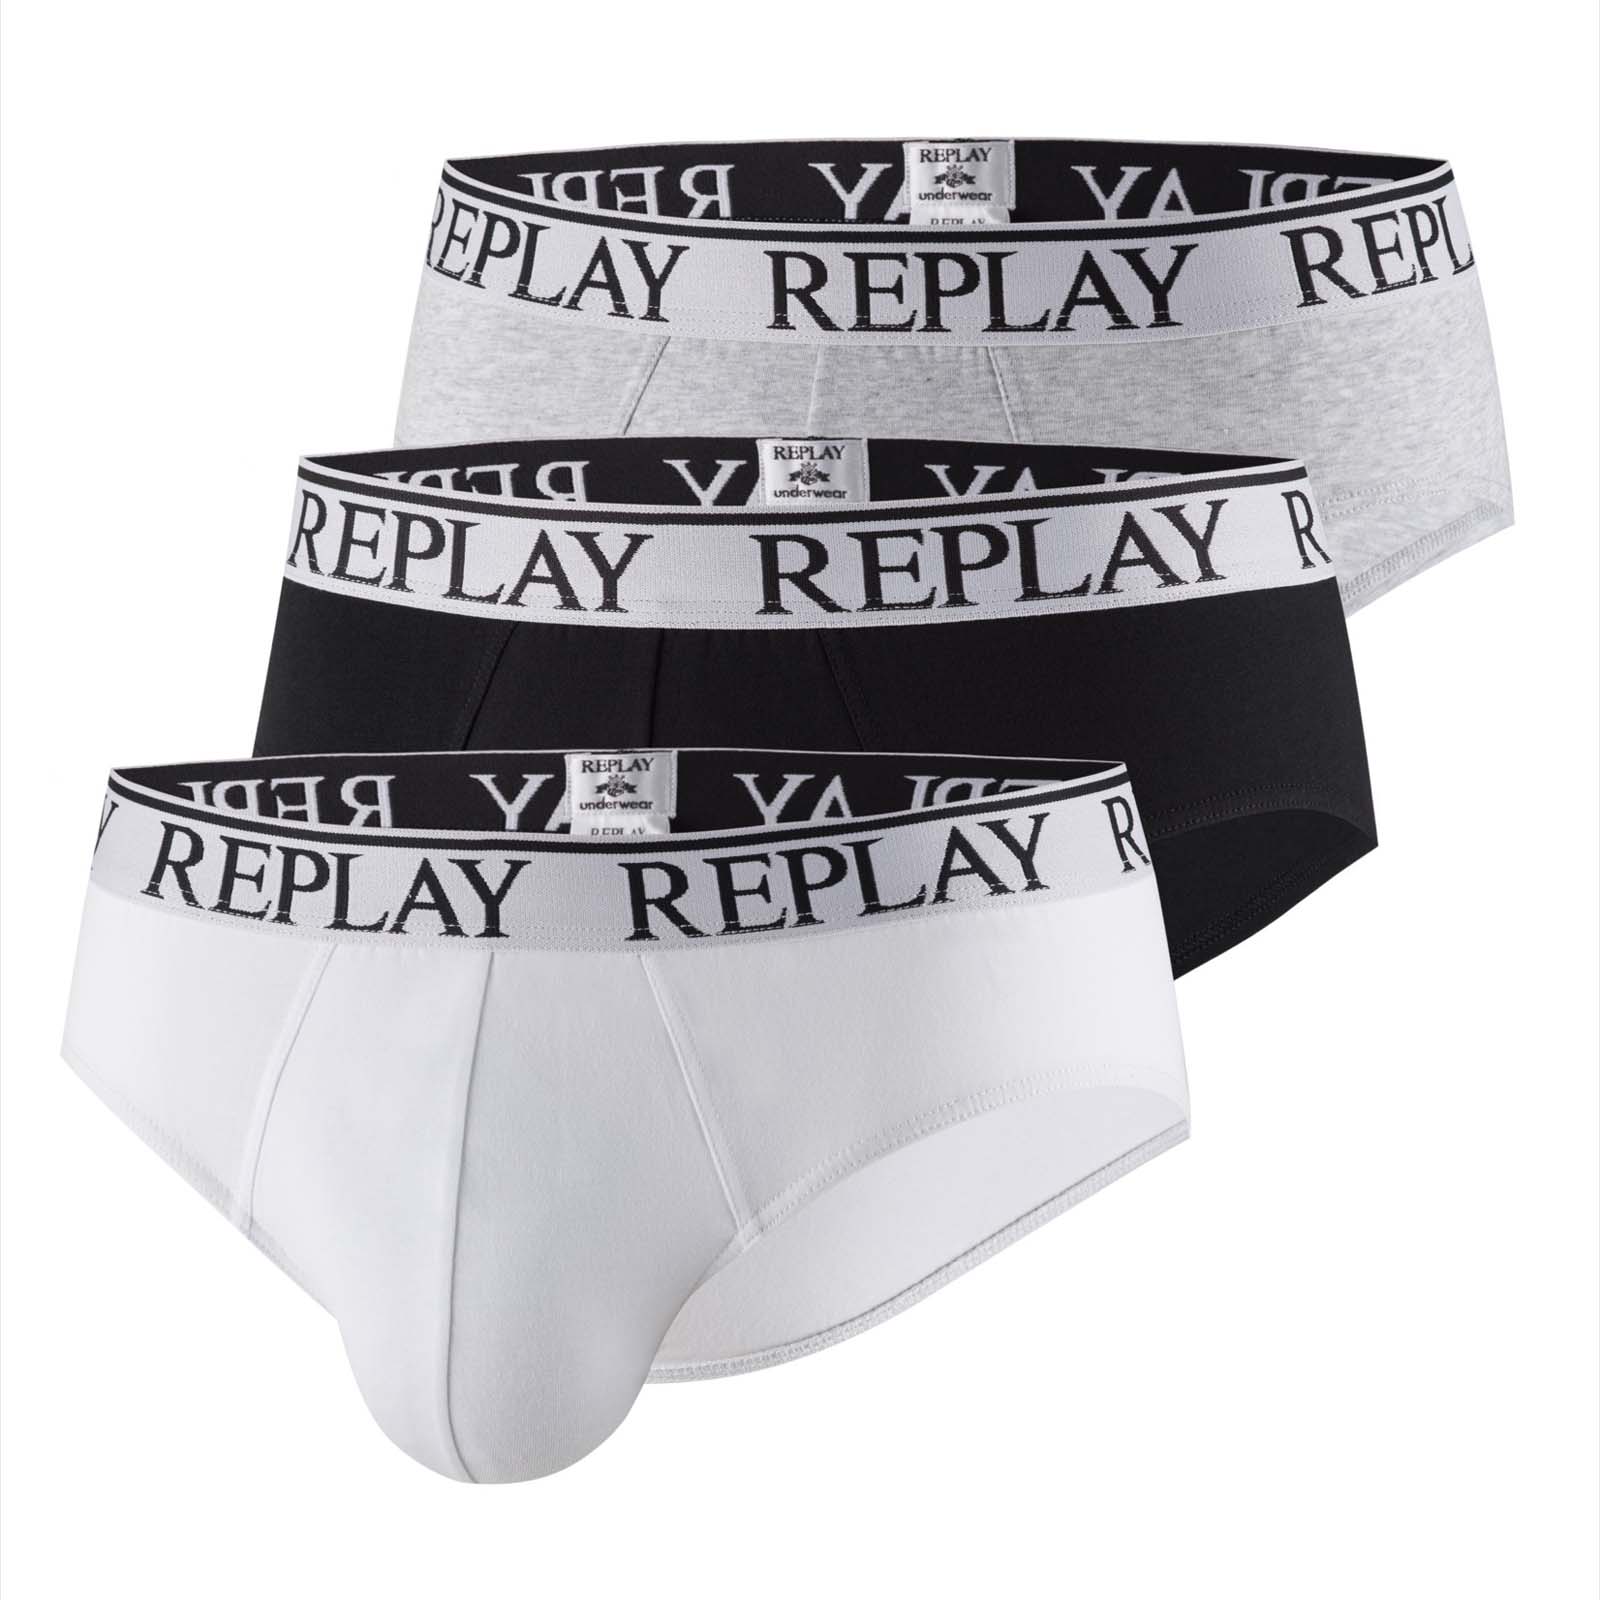 replay underwear